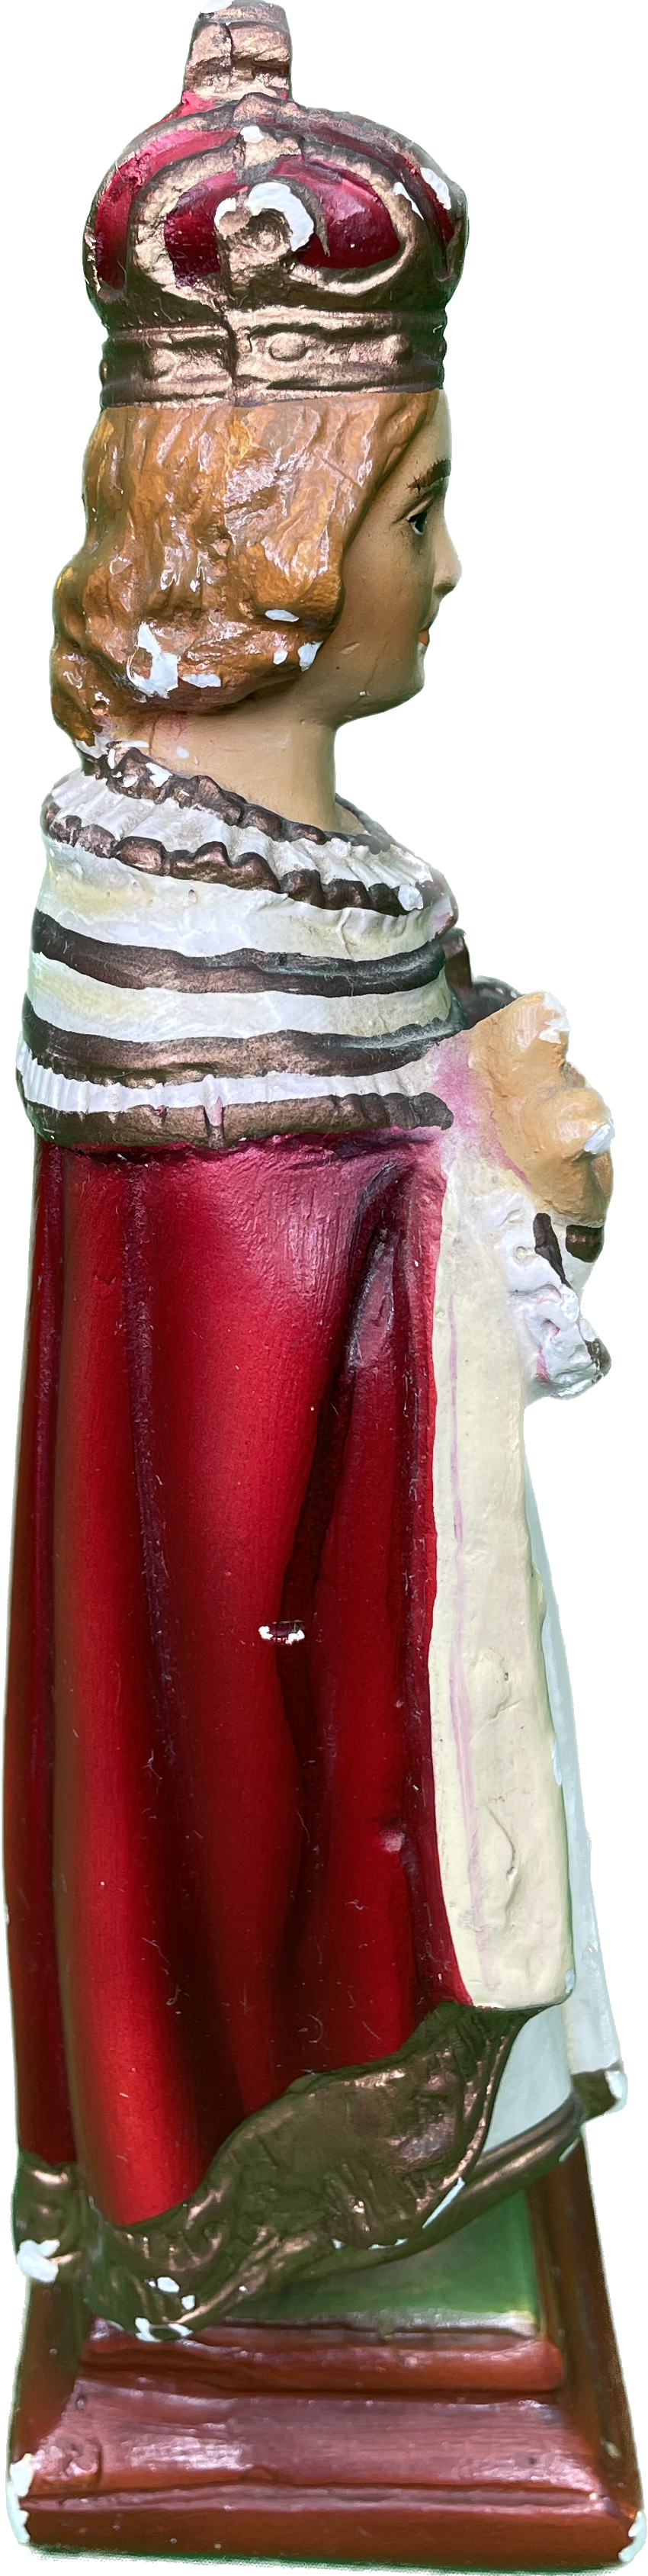 Vintage 8.5” Infant Of Prague Religious Chalkware Statue